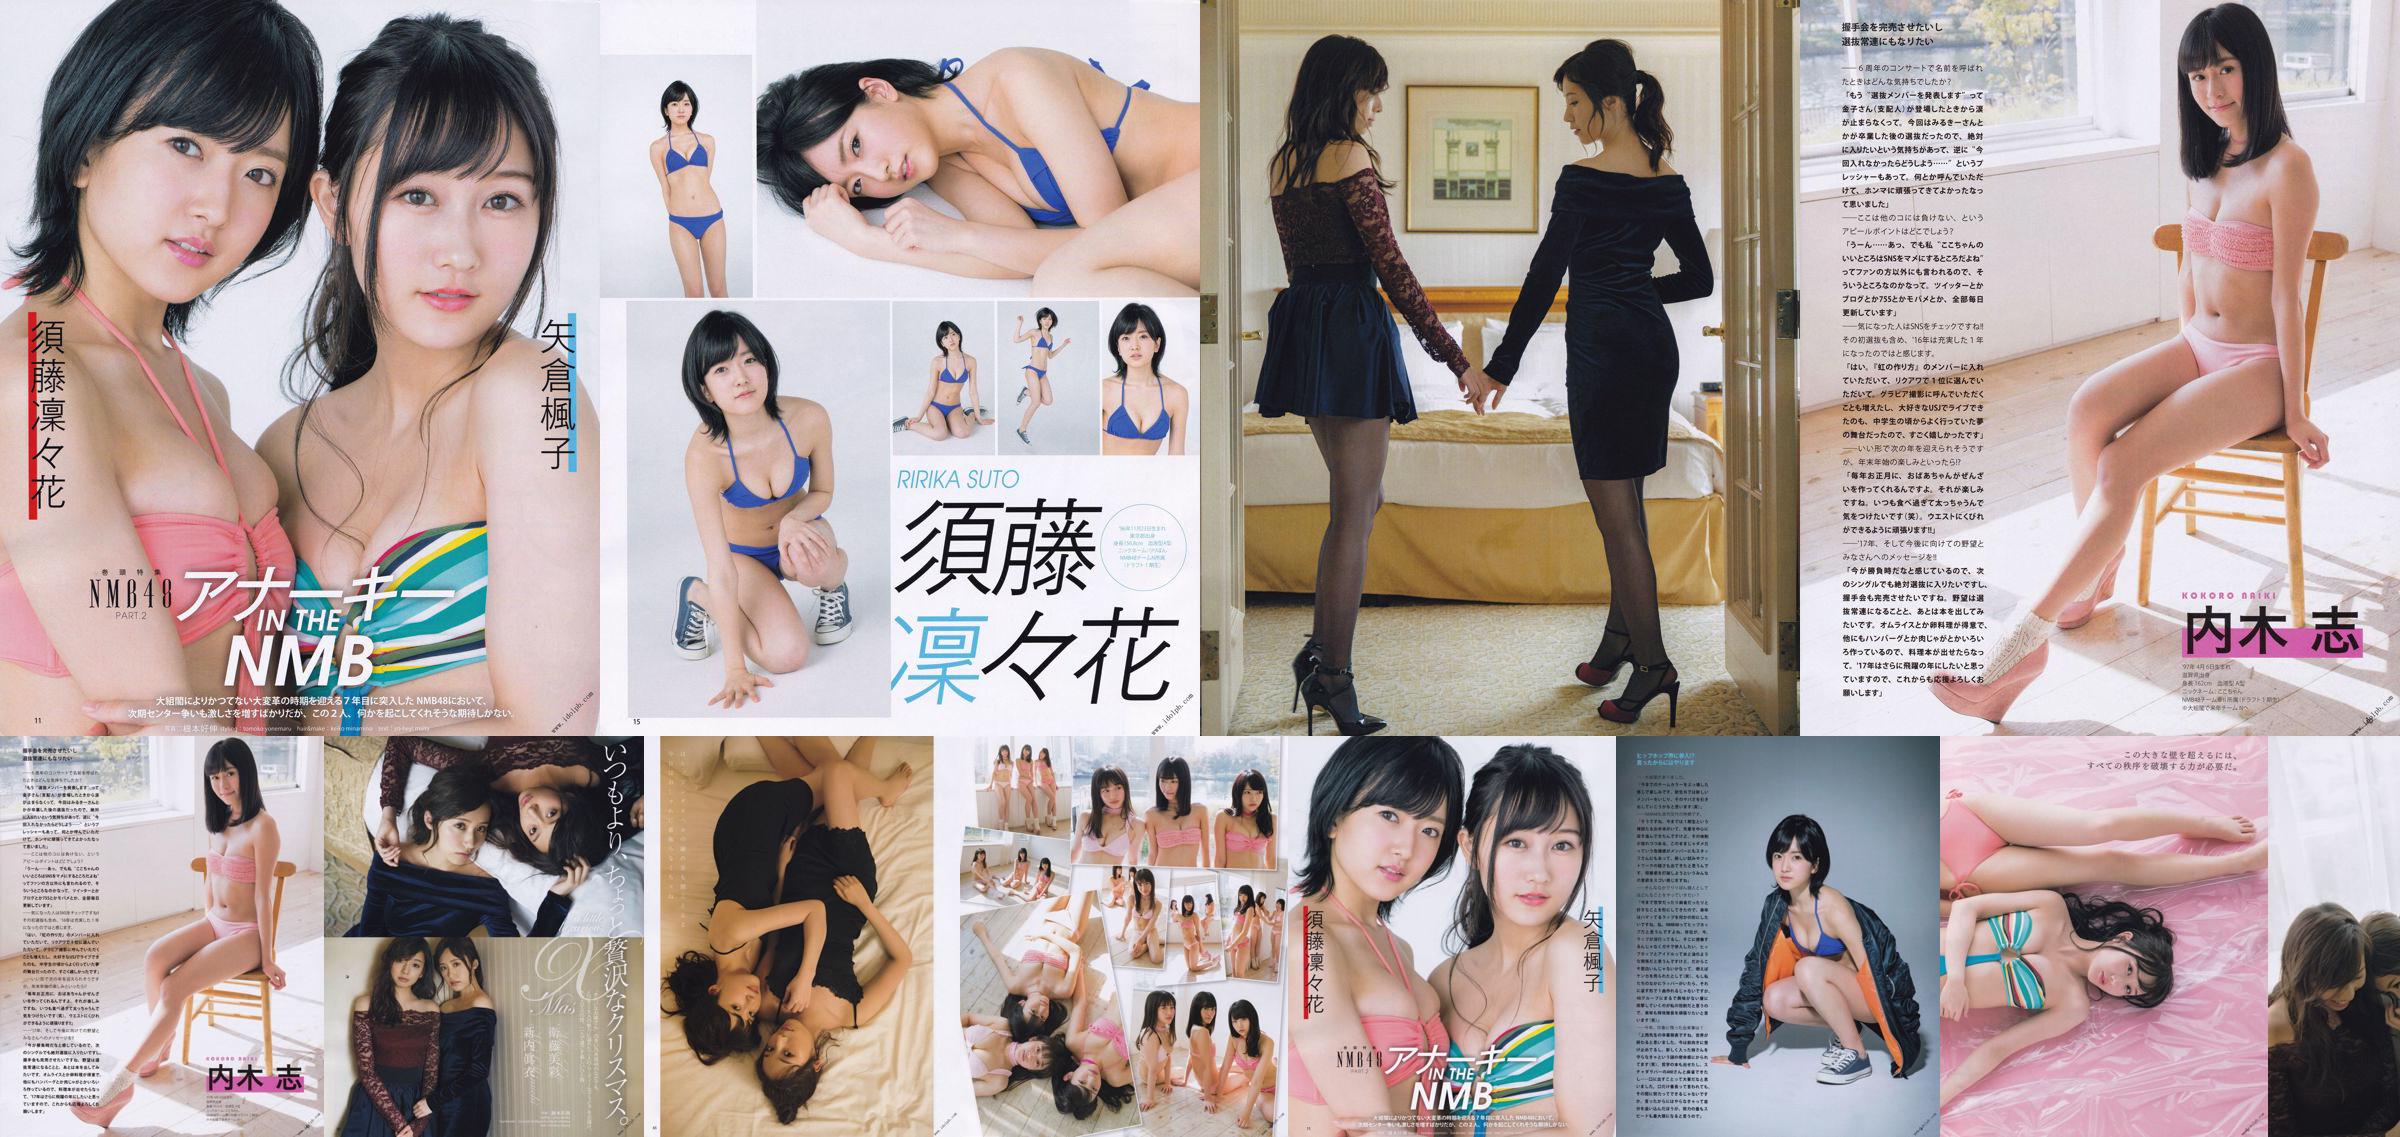 [BOMB!] ฉบับเดือนมกราคม 2017 Chihiro Kawakami Uchiki Shi, Azusa Uemura, Rinka Sudo, Rinka Shinuchi, Misa Eto, Kaedeko Yakura Photo magazine No.9976a7 หน้า 1